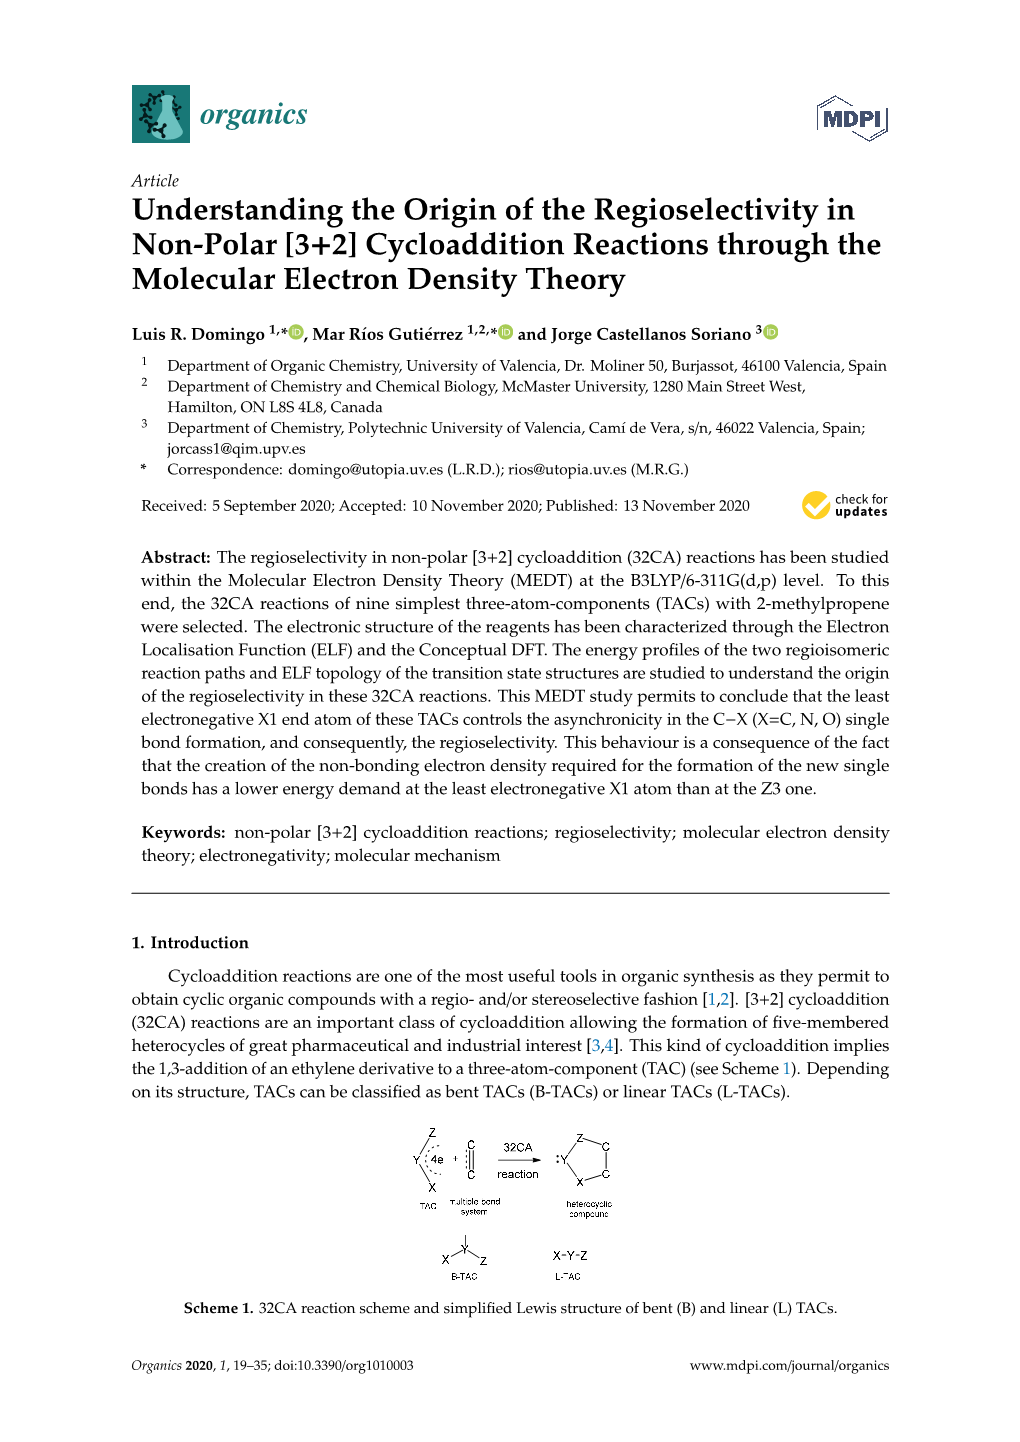 Understanding the Origin of the Regioselectivity in Non-Polar [3+2] Cycloaddition Reactions Through the Molecular Electron Density Theory